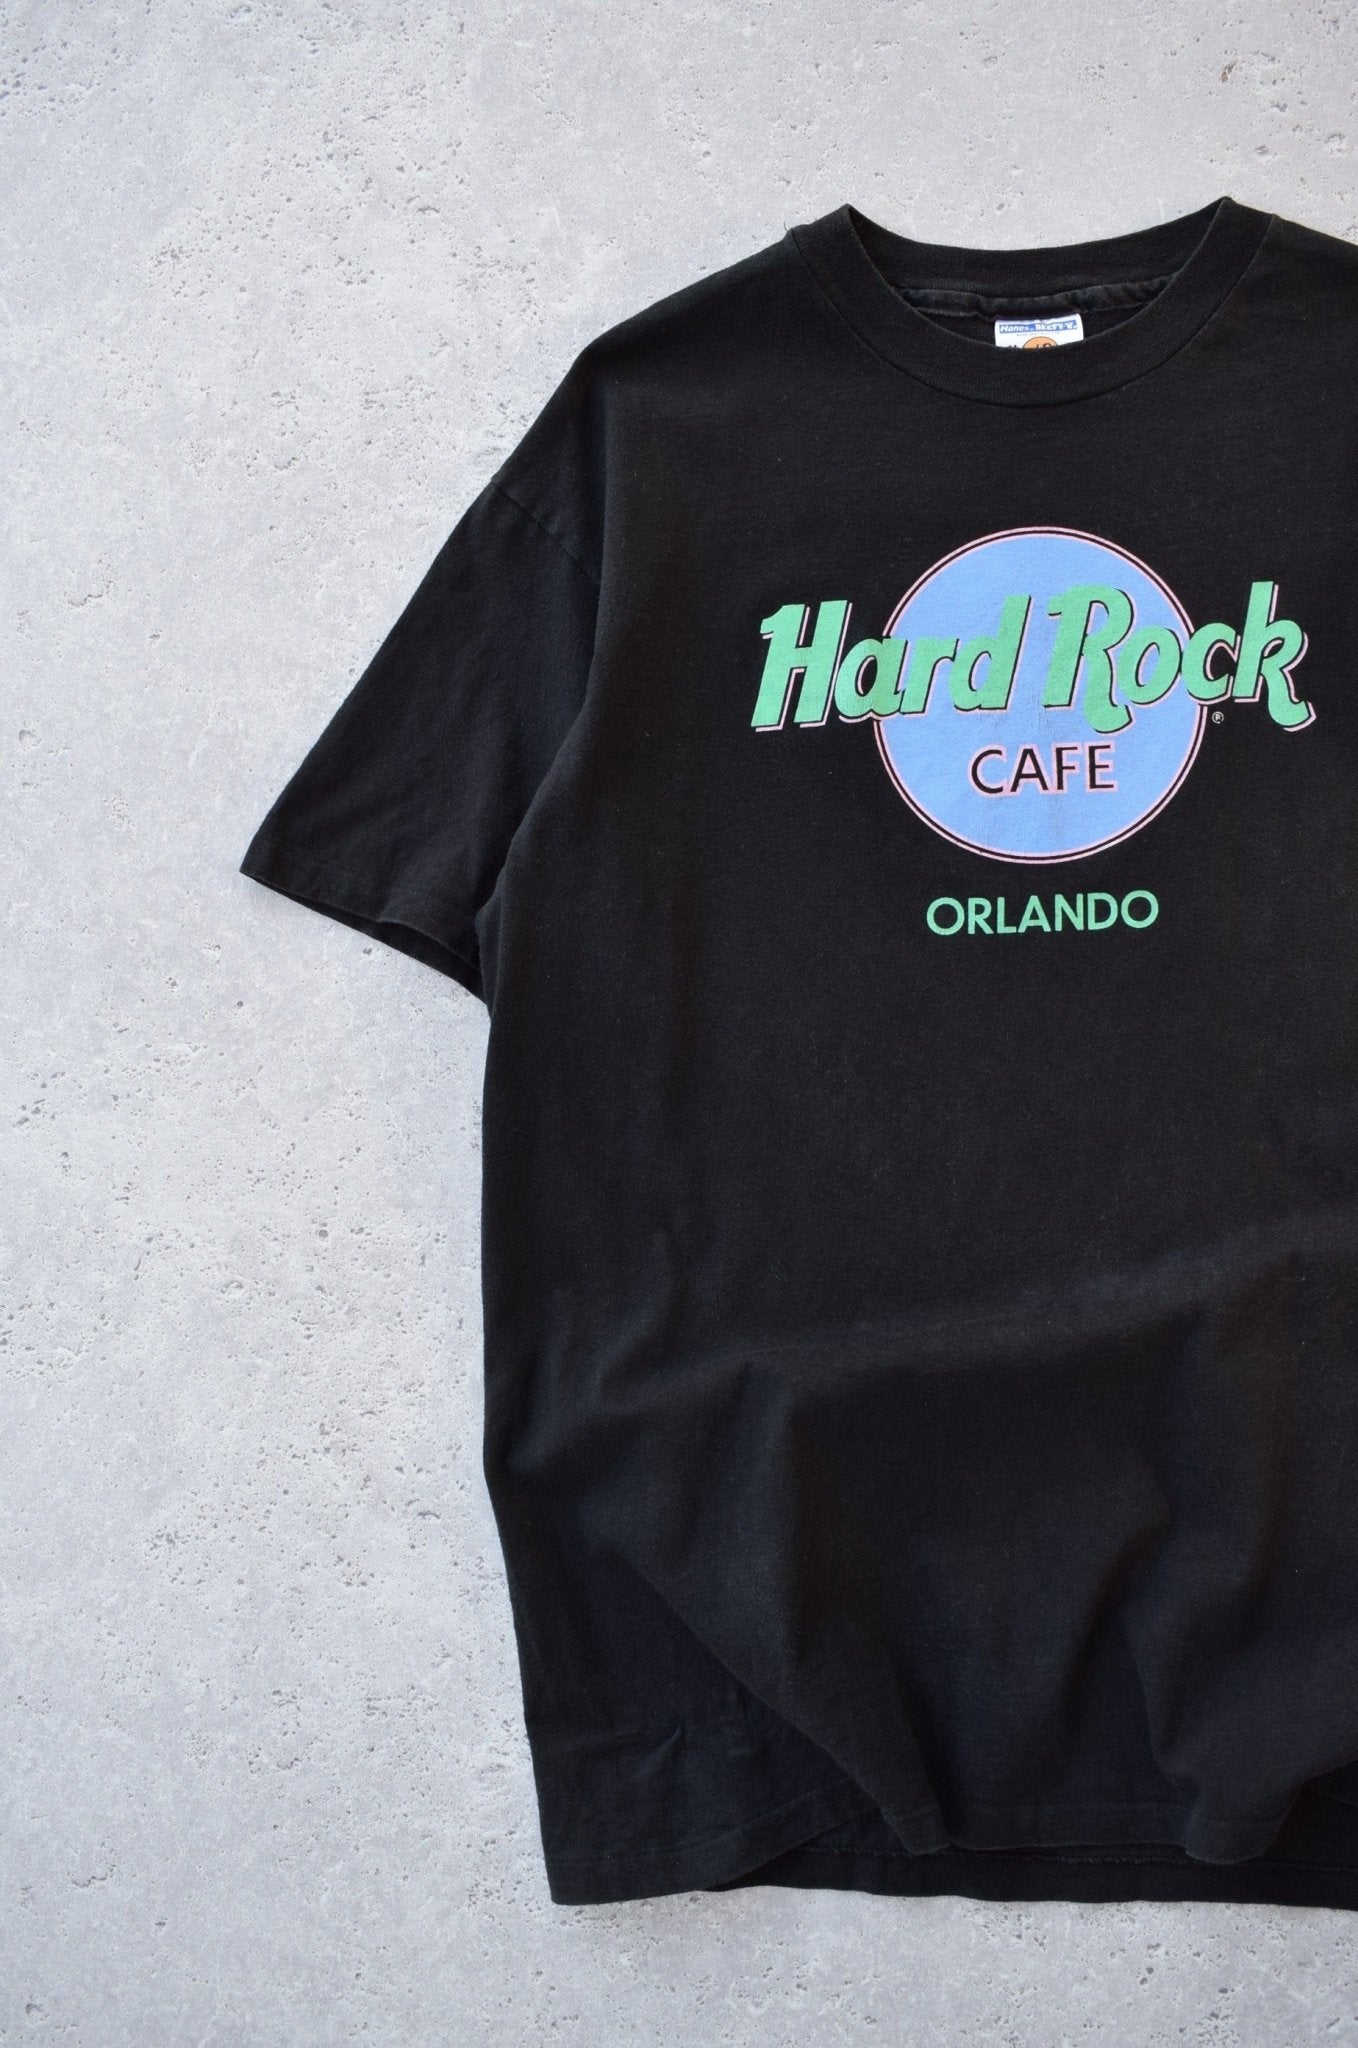 Vintage 90s Hard Rock Cafe Orlando Tee (L/XL) - Retrospective Store